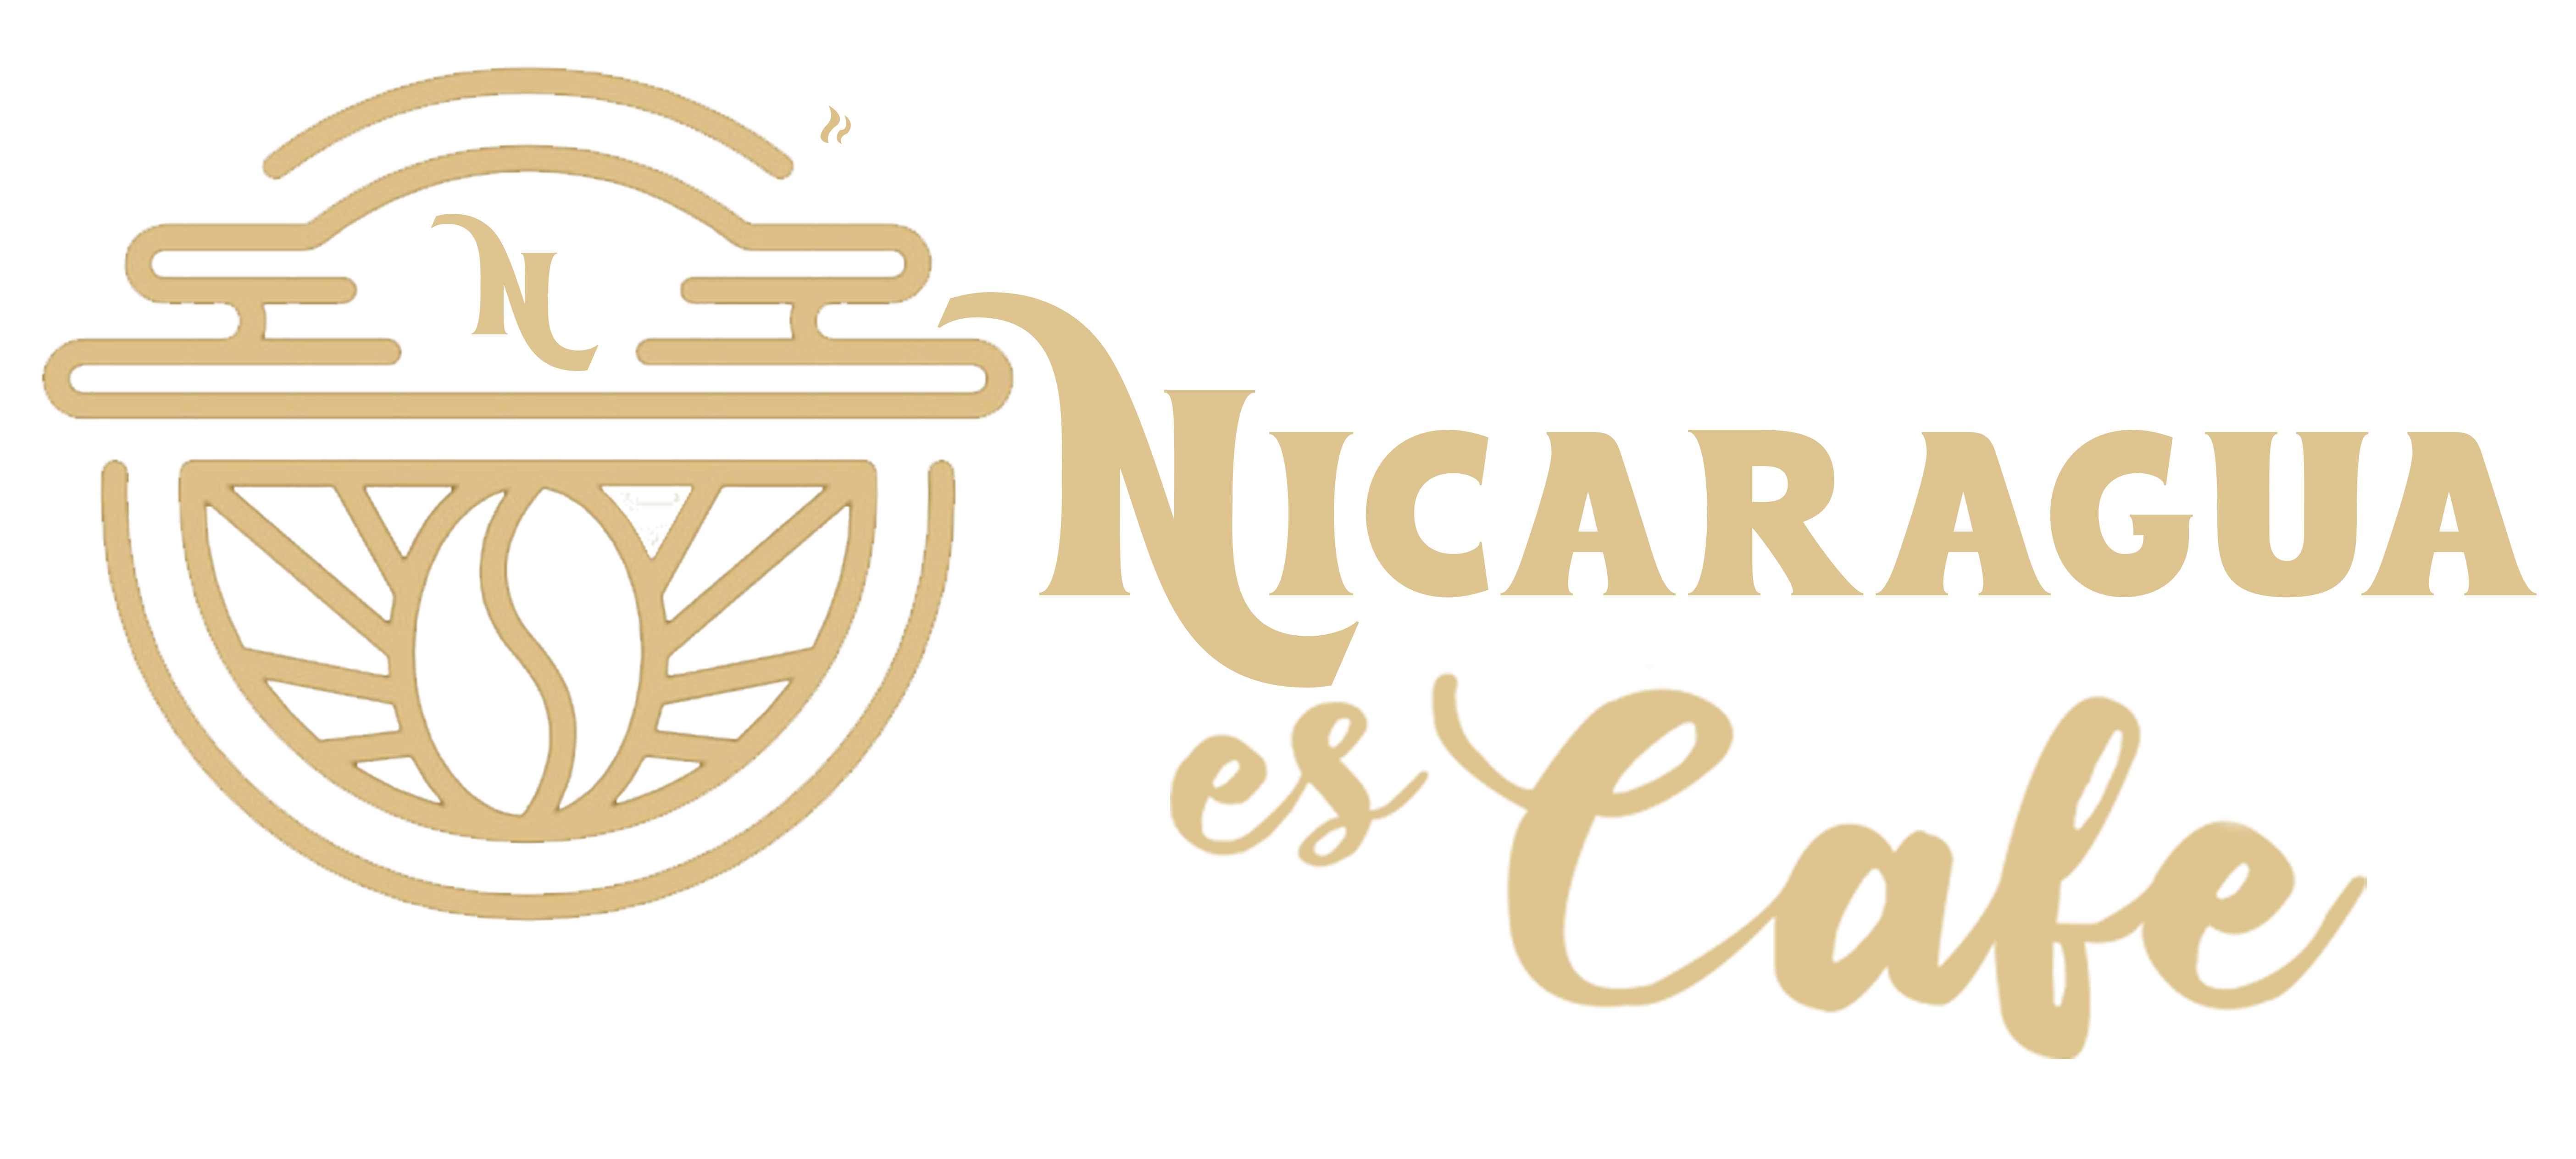 Nicaragua es Café